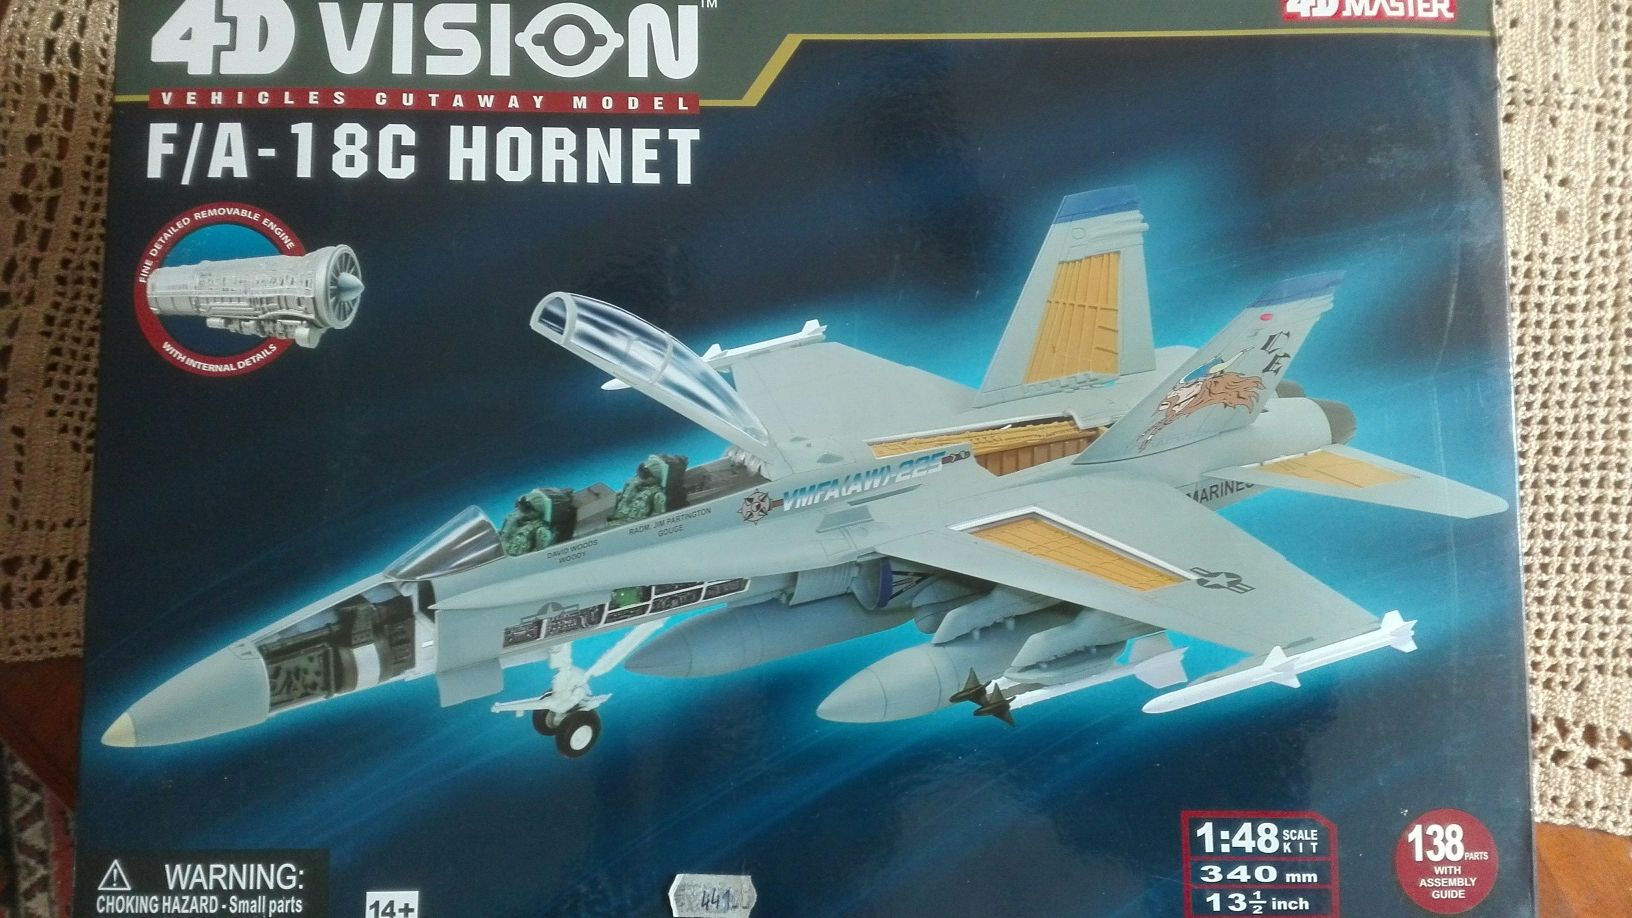 Model samolotu F/A-18C Hornet 4D vision 1:48